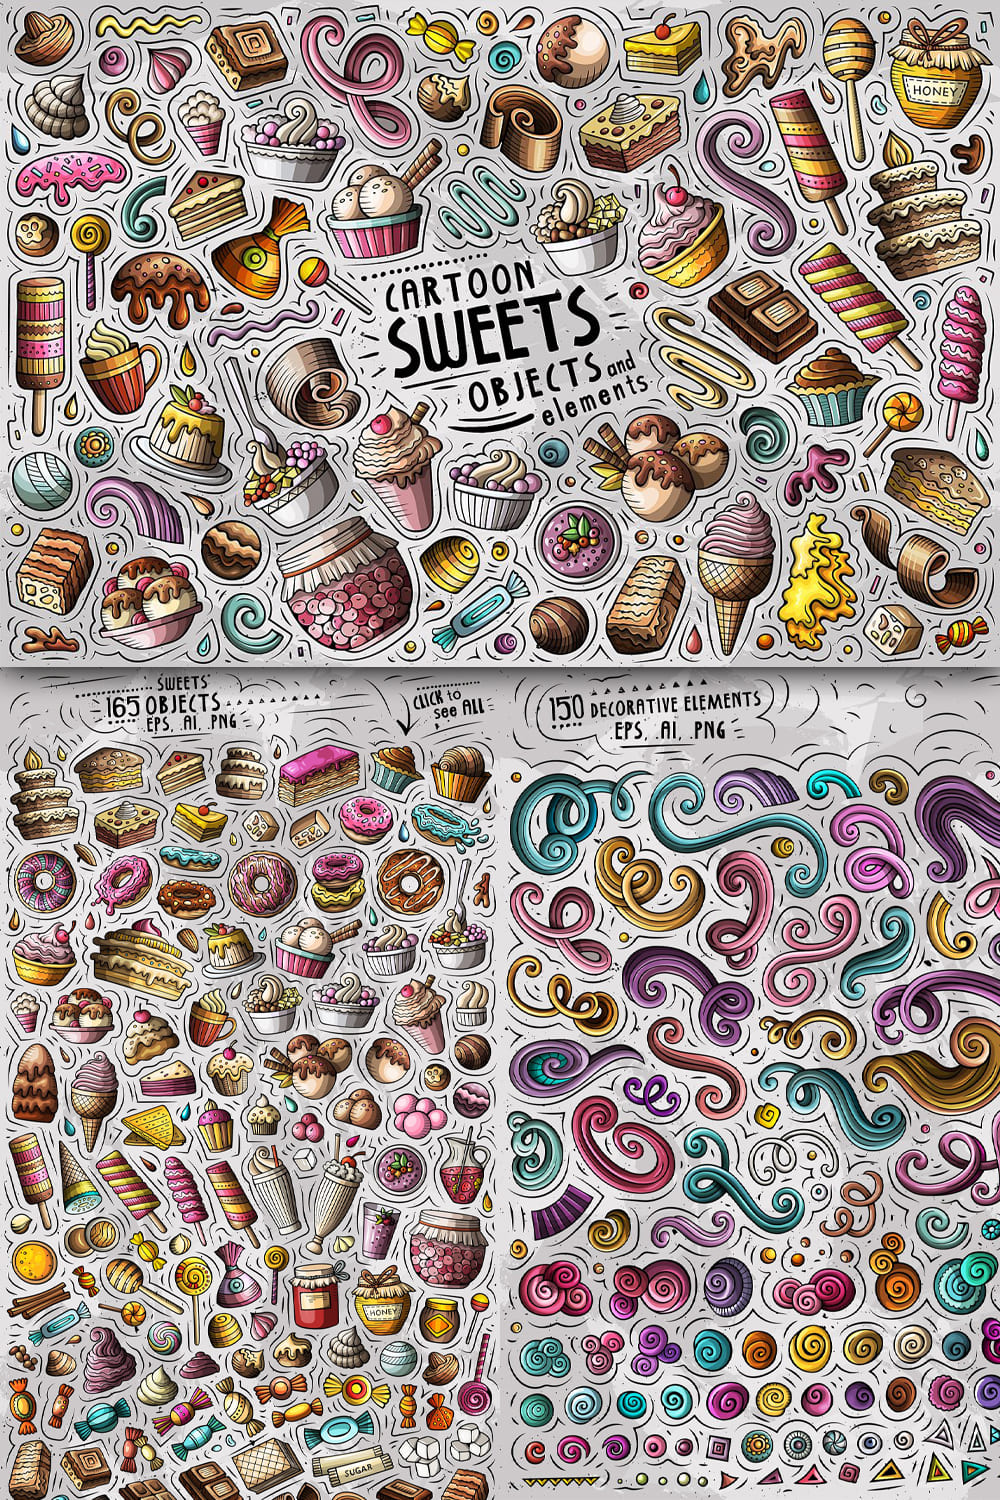 Sweet Food Cartoon Objects Set Pinterest 1000 1500.